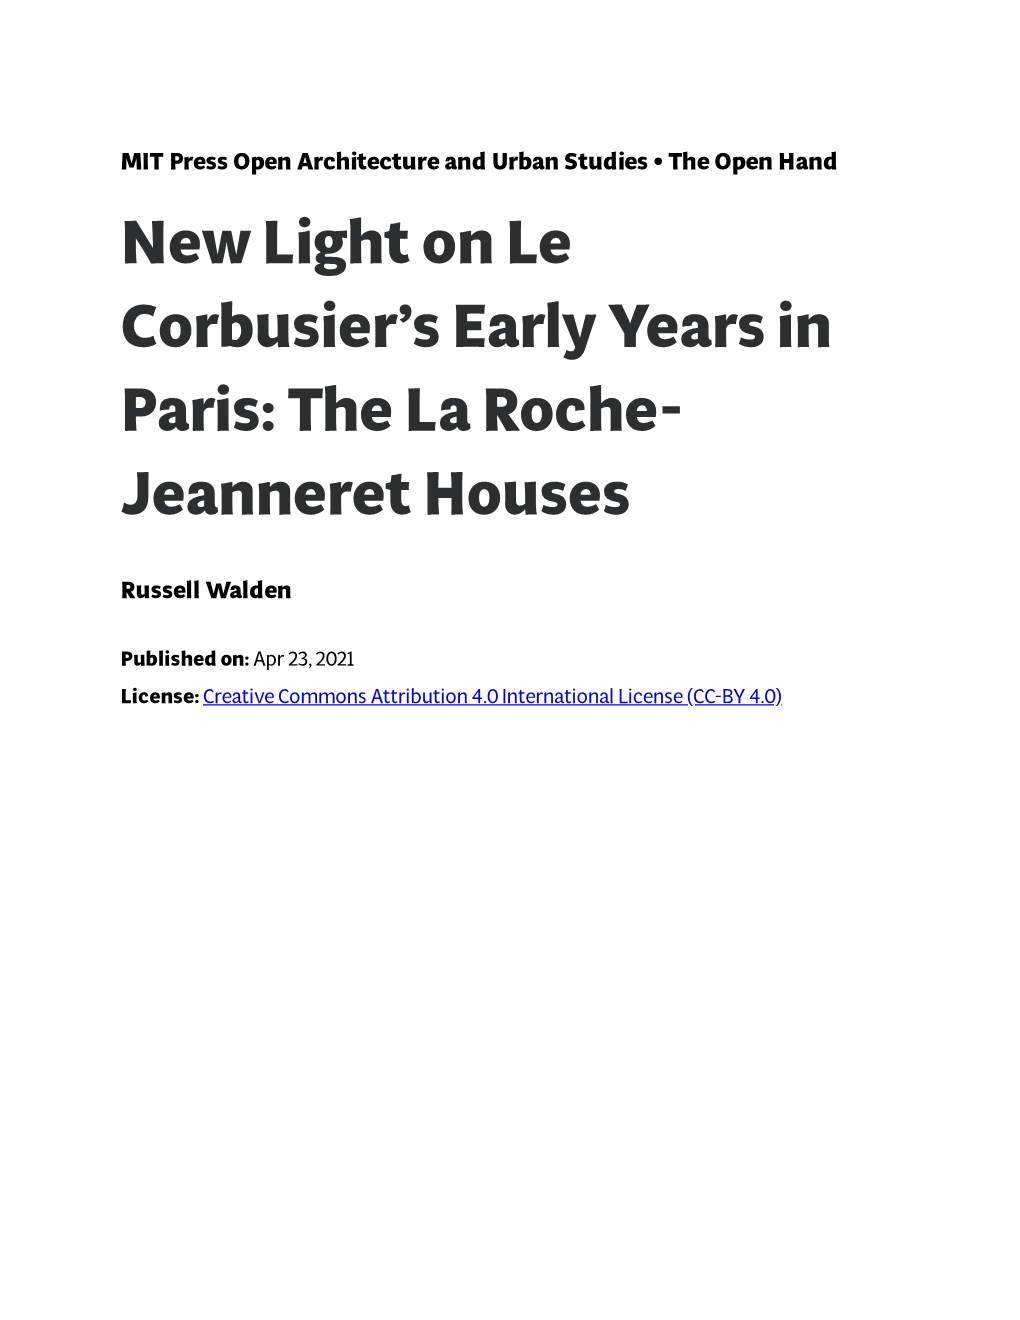 New Light on Le Corbusier's Early Years in Paris: the La Roche